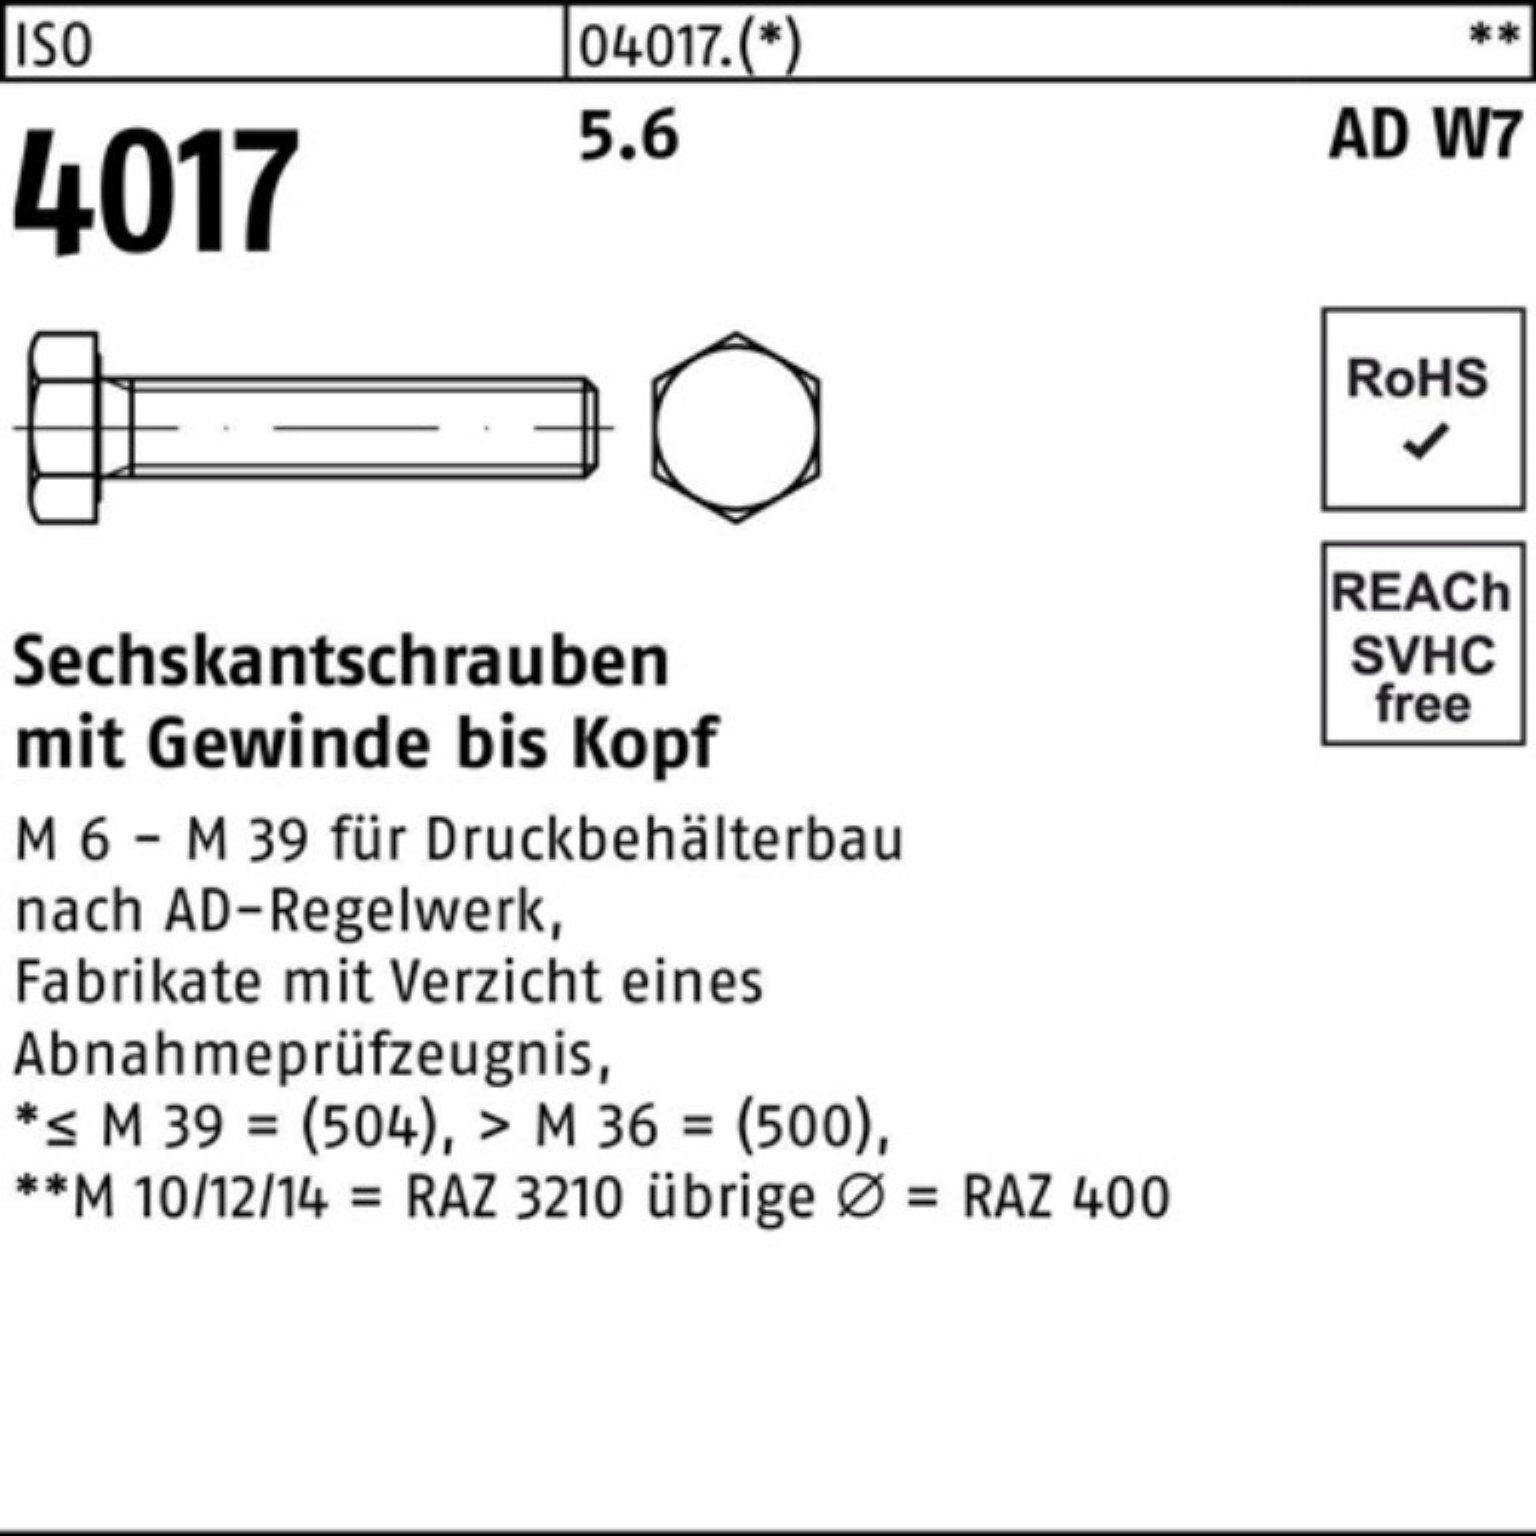 Bufab Sechskantschraube 100er Pack I 80 W7 M12x 50 VG 5.6 ISO Sechskantschraube AD 4017 Stück